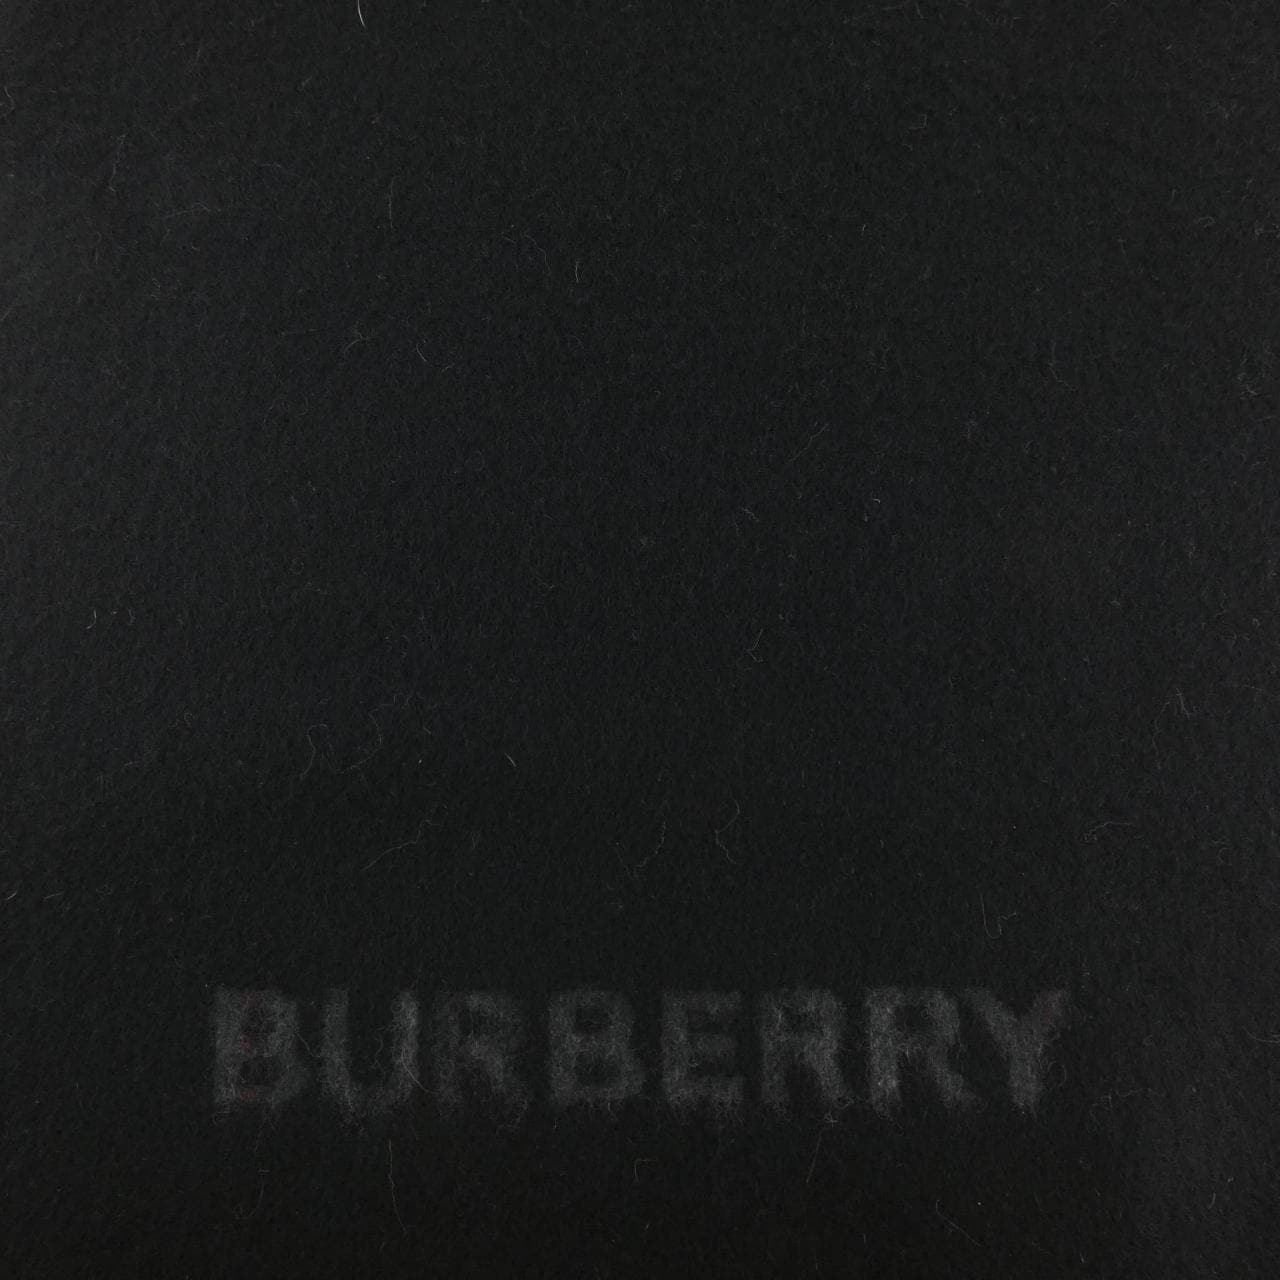 BURBERRY圍巾